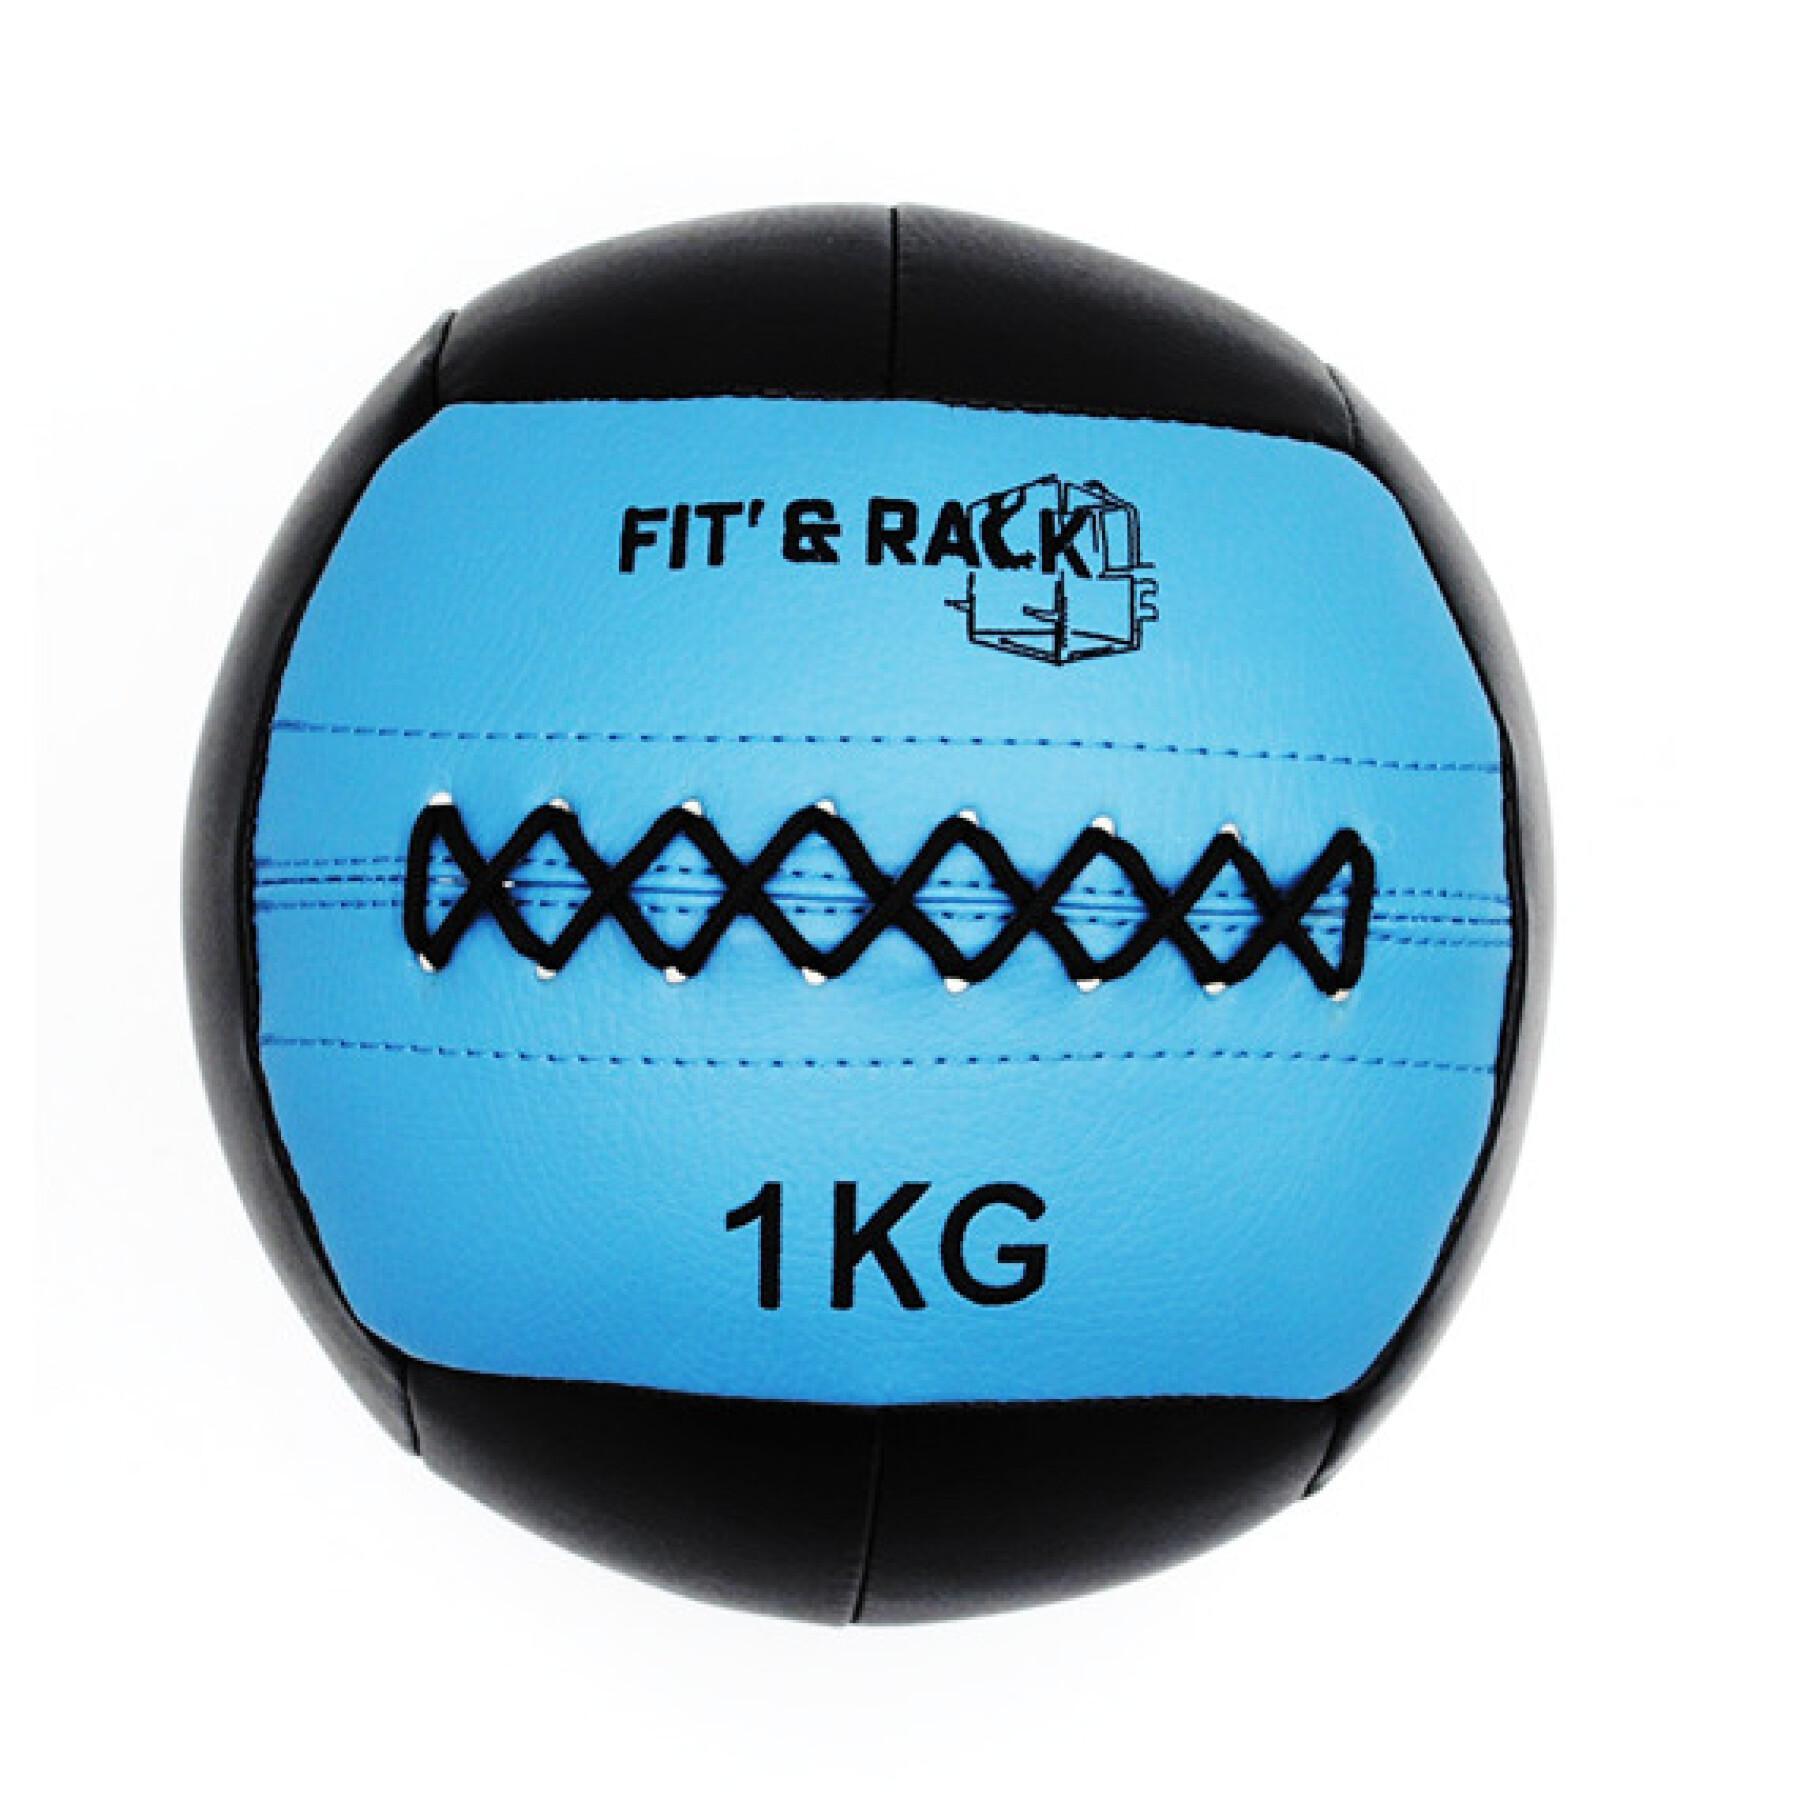 Competición de Wall Ball Fit & Rack 1 Kg